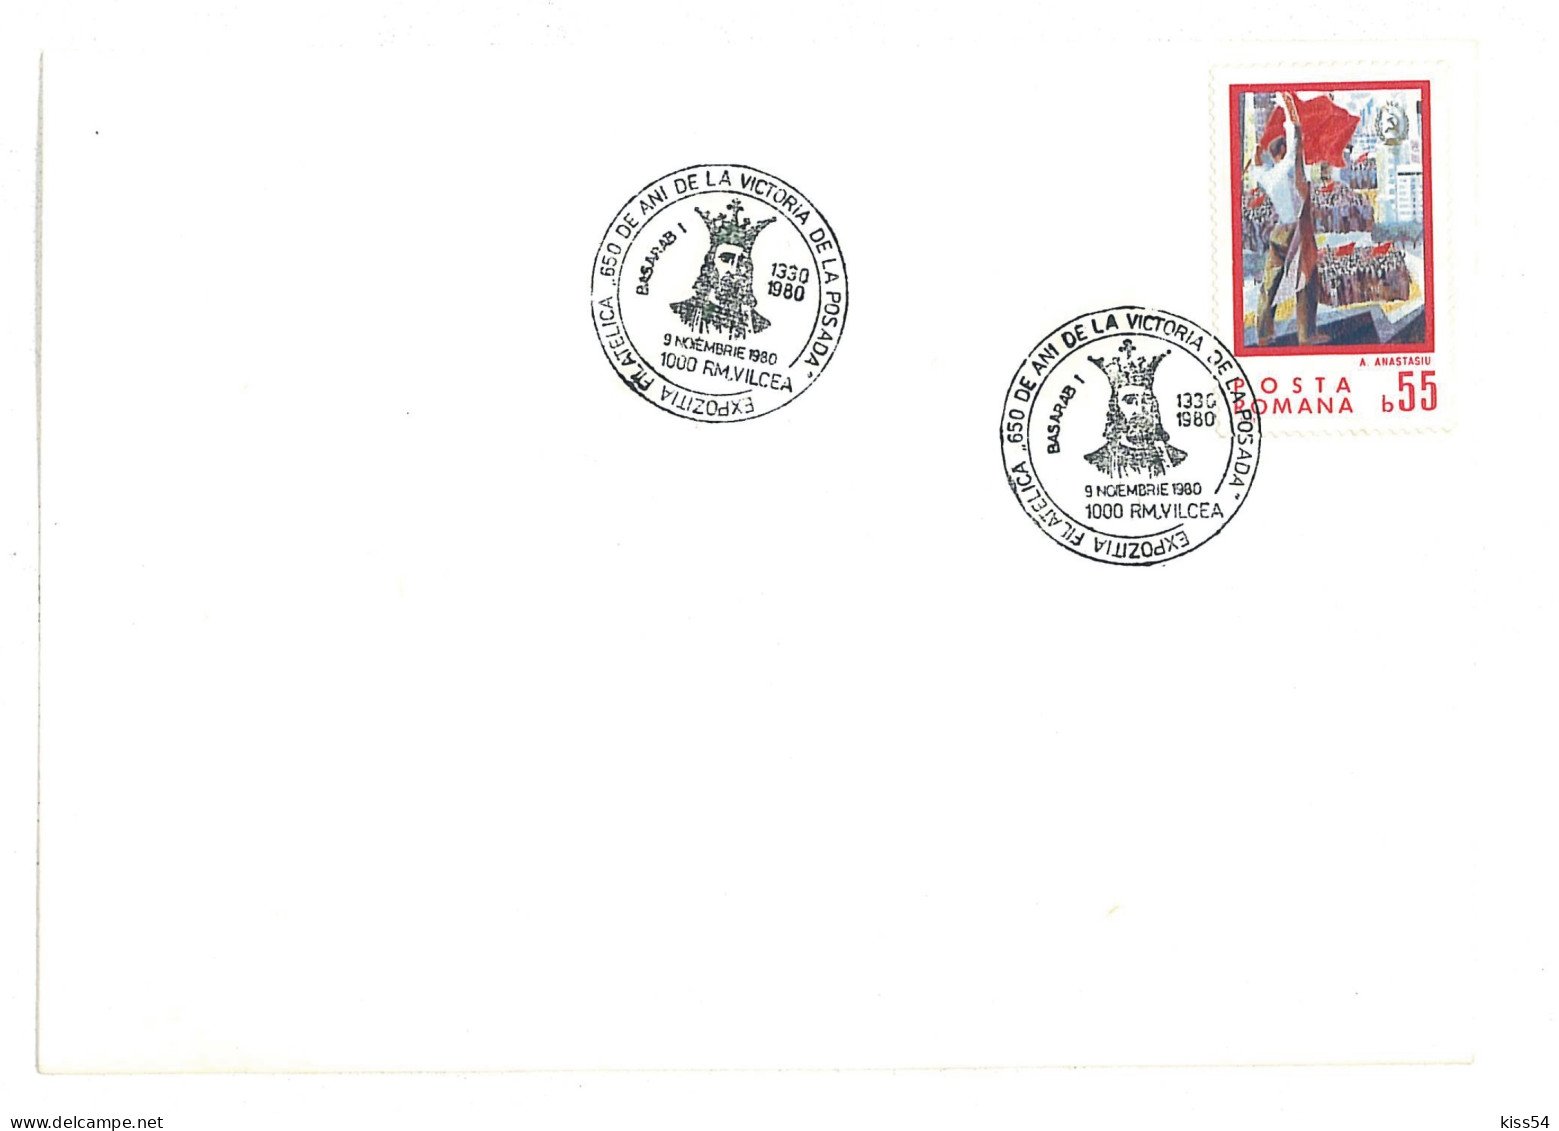 COV 35 - 2053, History BASARAB I, Posada, Romania - Cover - Used - 1980 - Briefe U. Dokumente